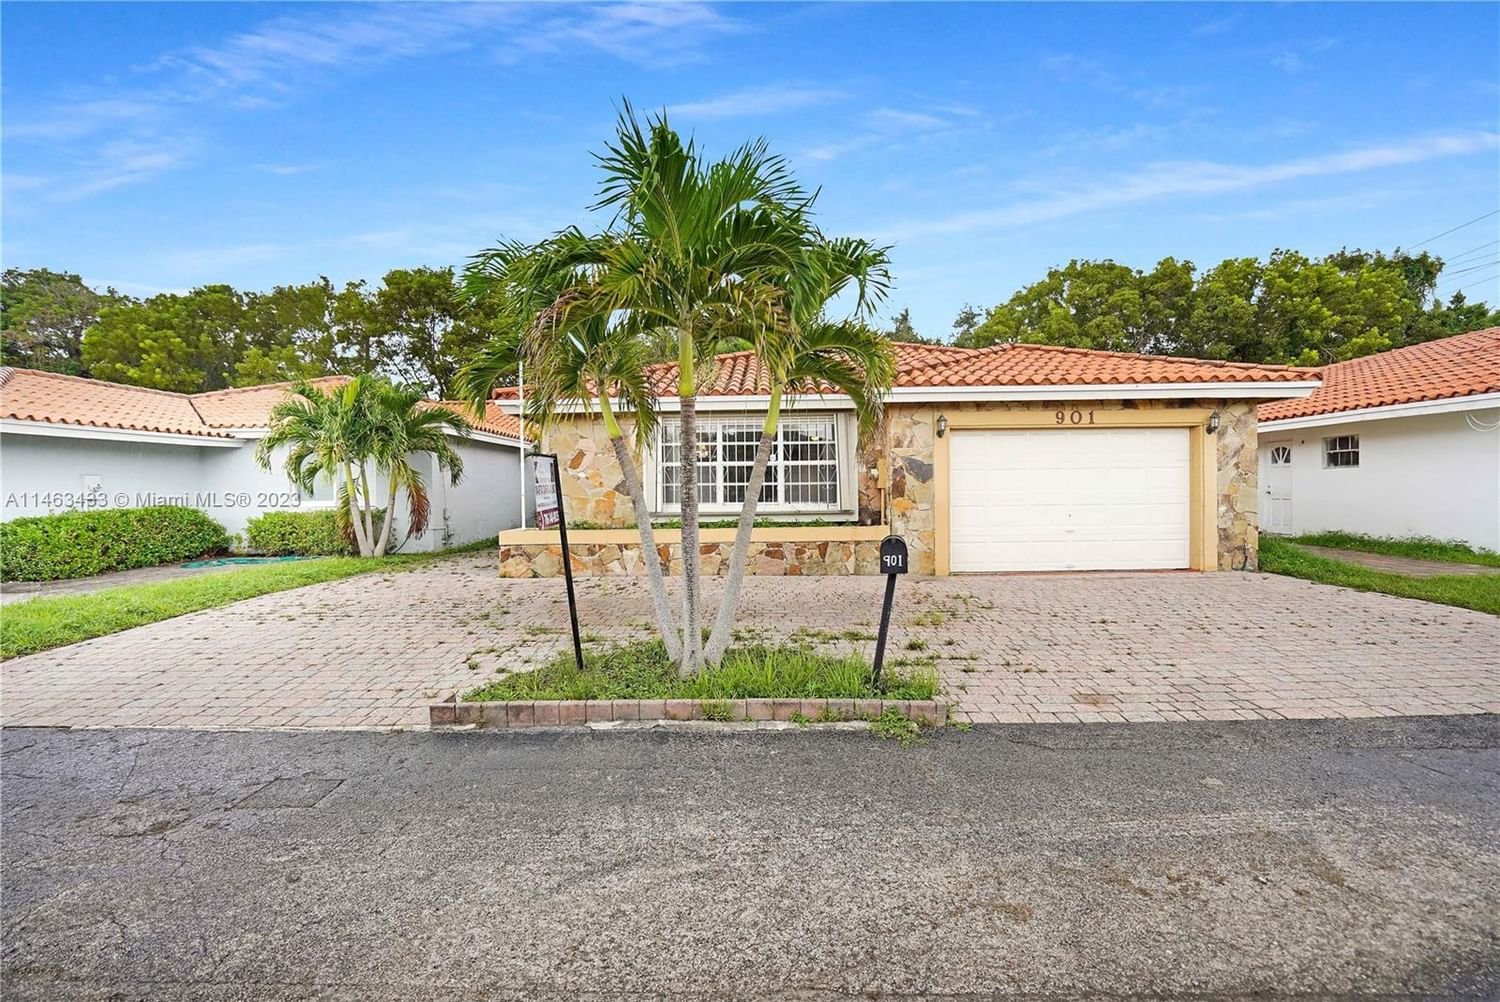 Real estate property located at 901 136th Pl, Miami-Dade County, Miami, FL